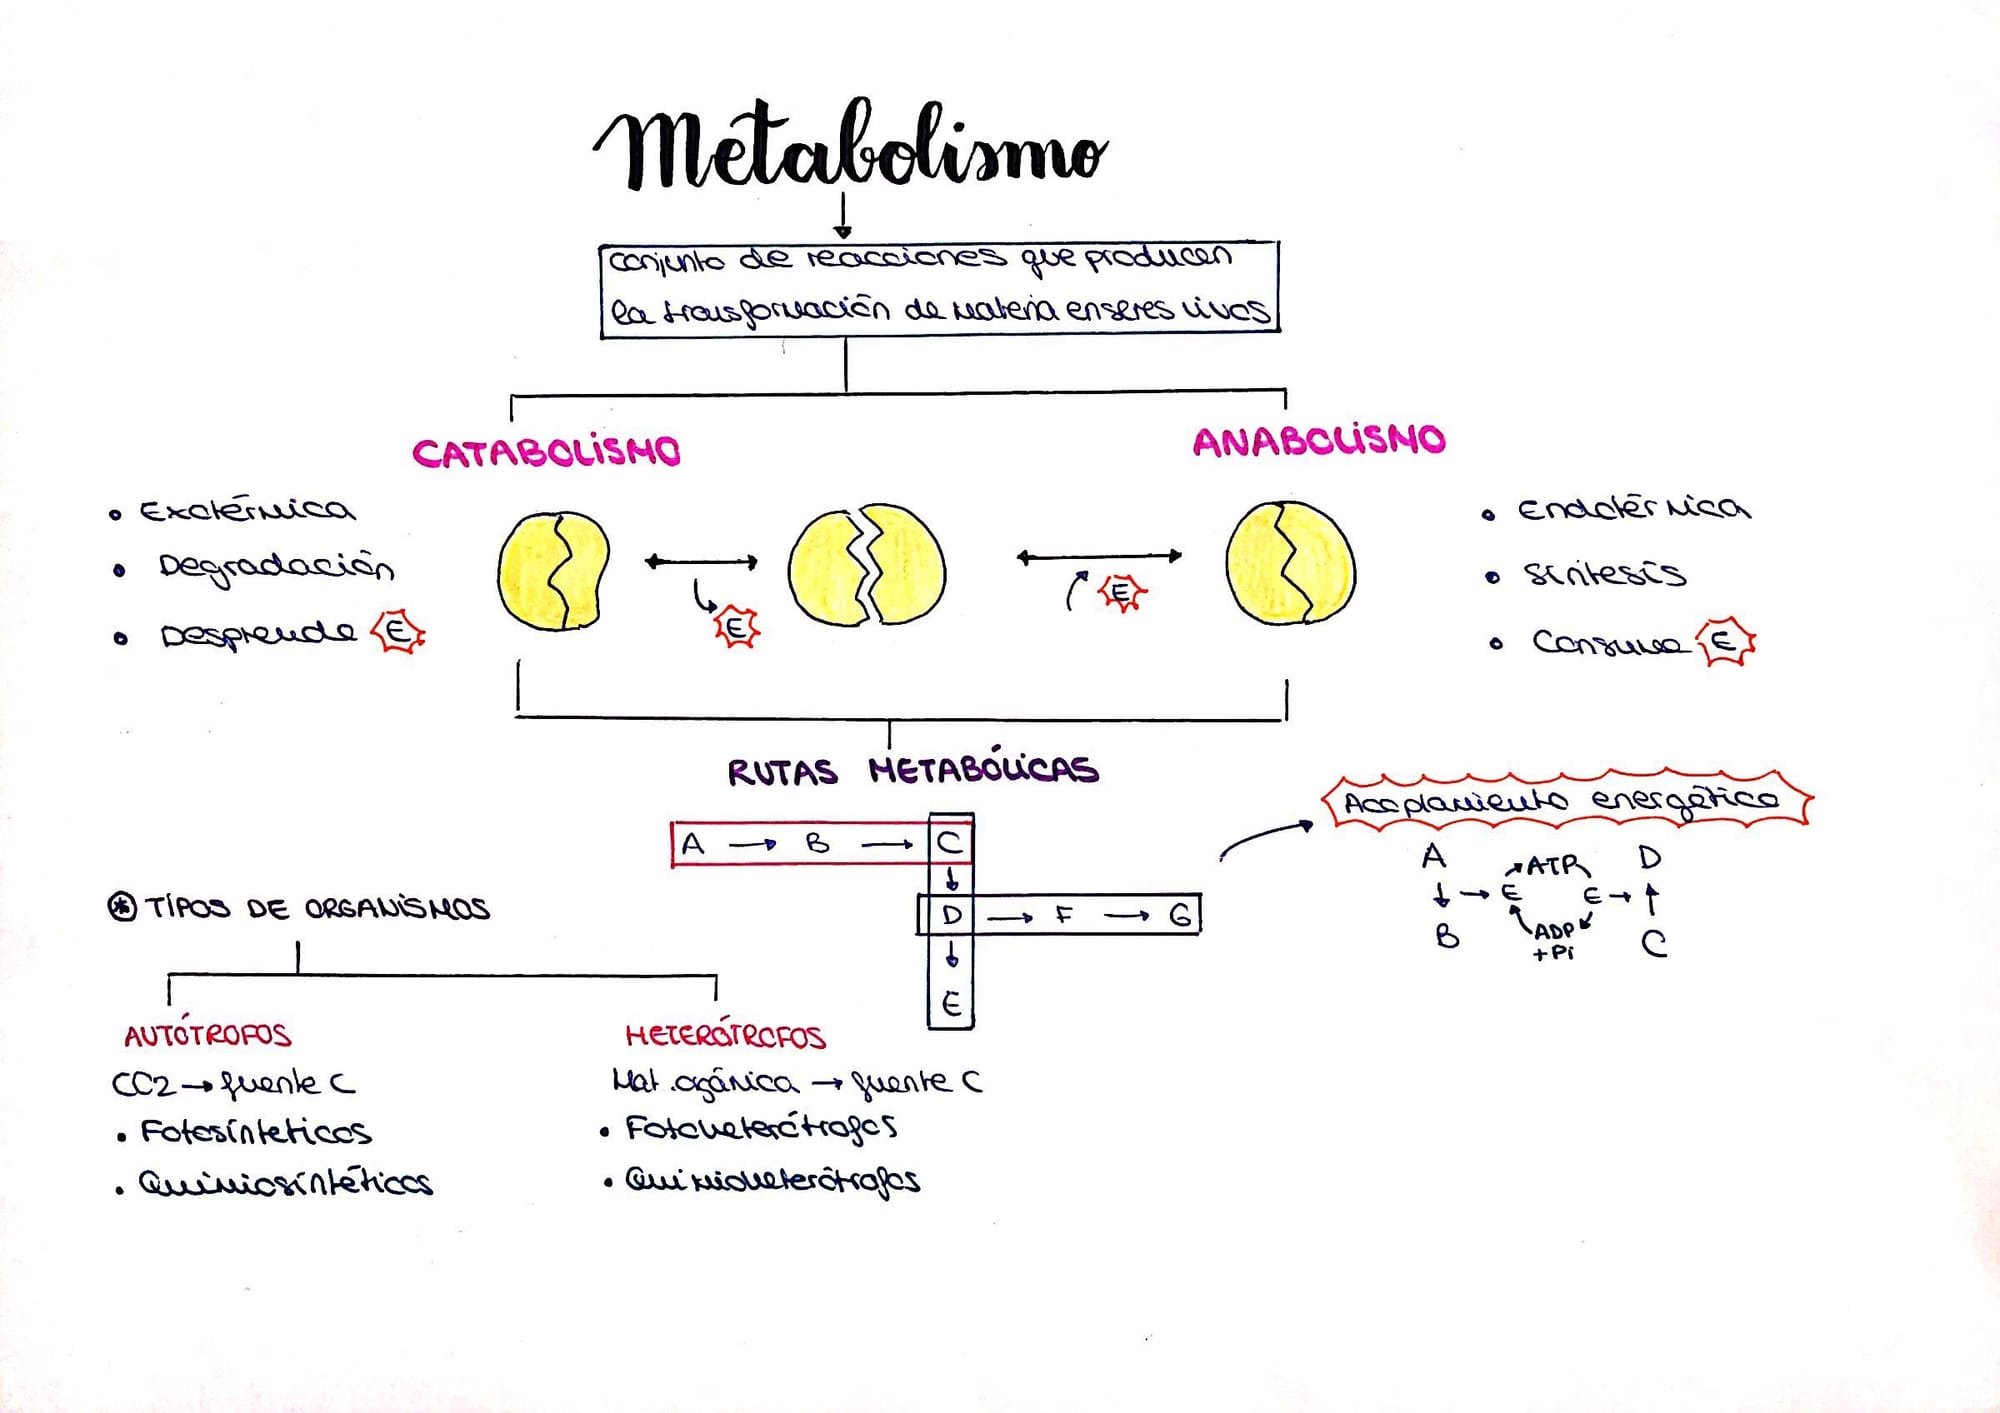 Metabolismo acido de crasulaceas